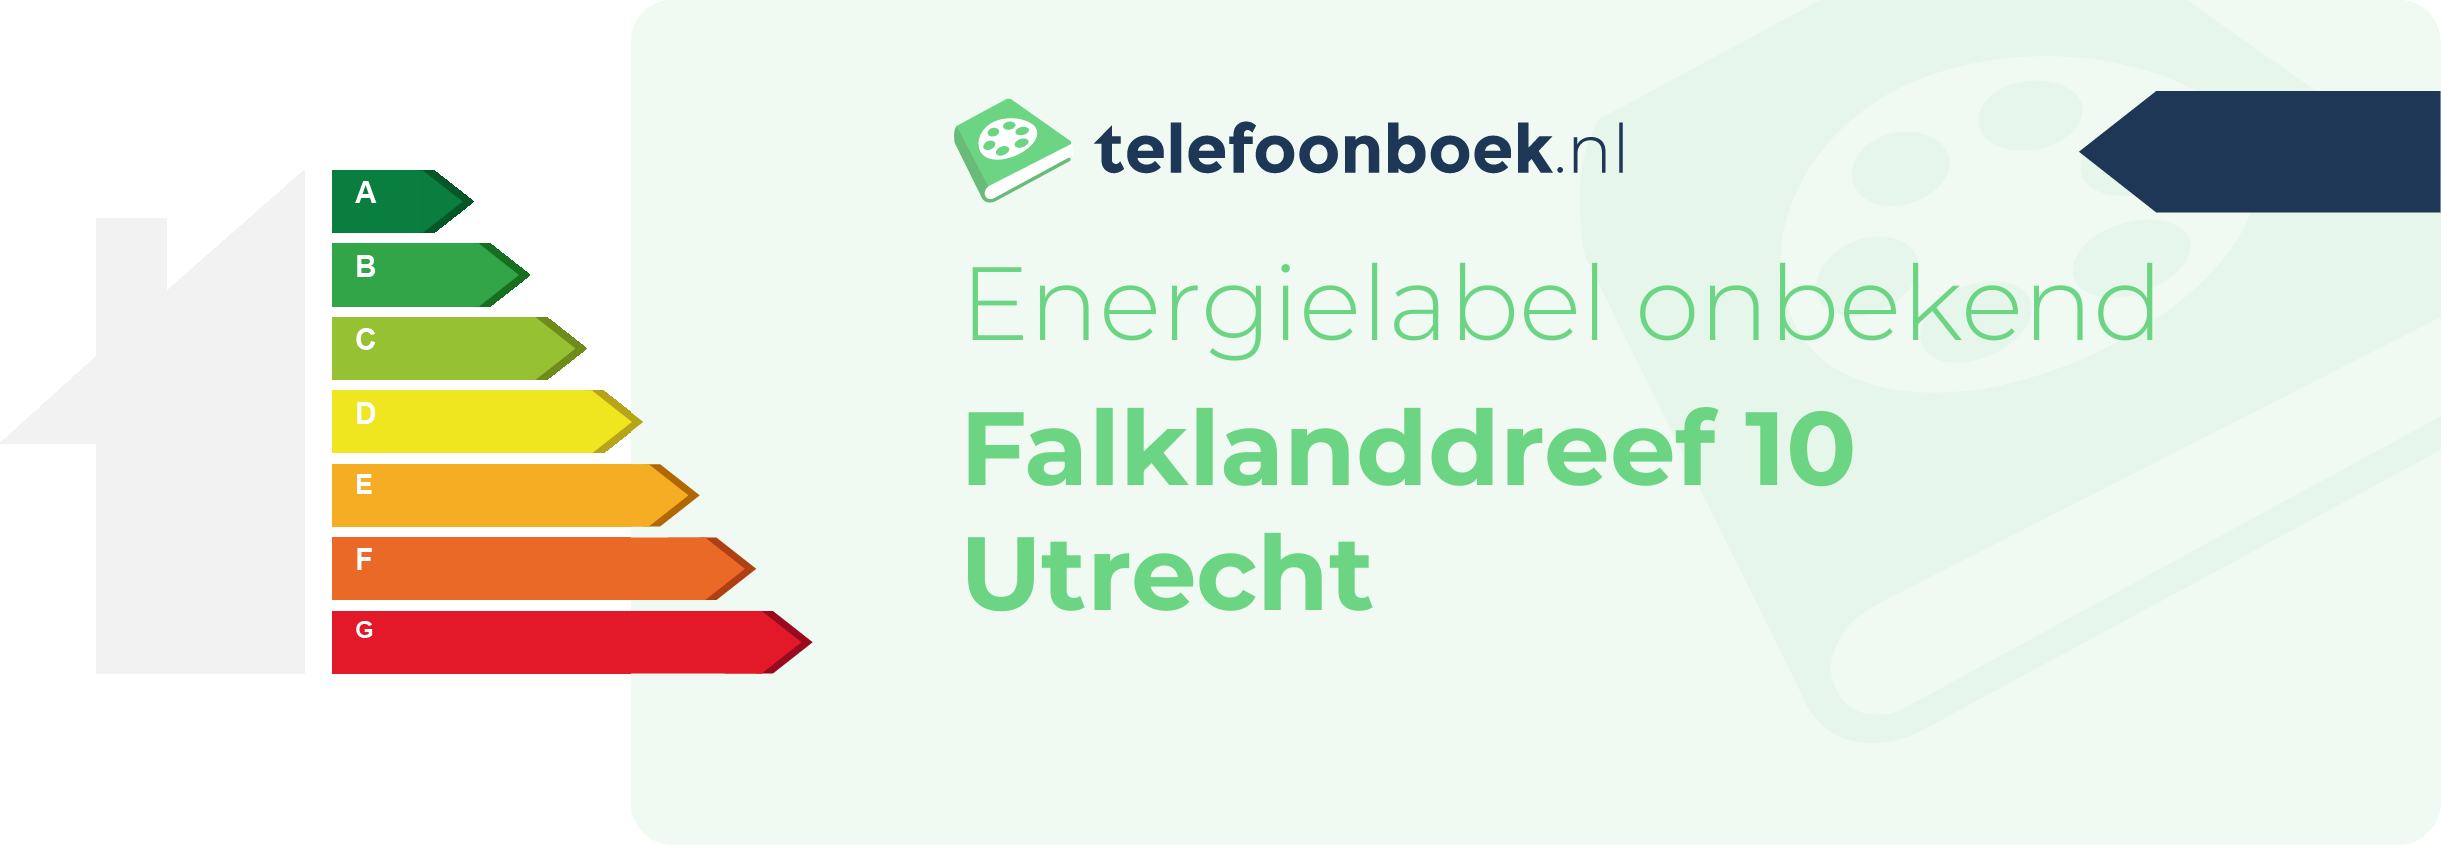 Energielabel Falklanddreef 10 Utrecht